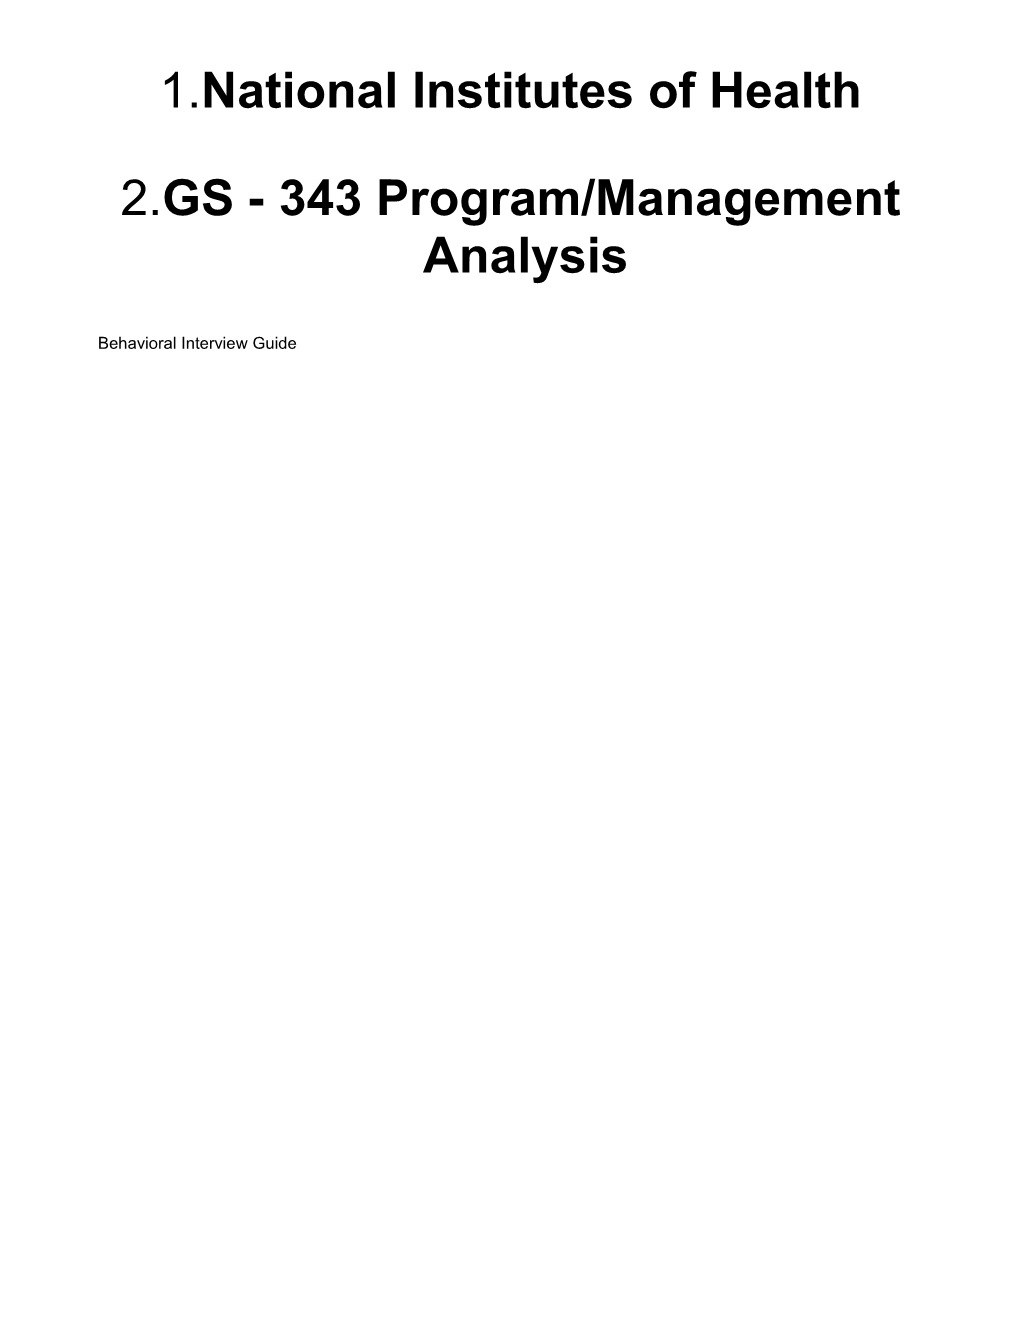 NIH Behavioral Interview Guide GS 343 Program/Management Analysis